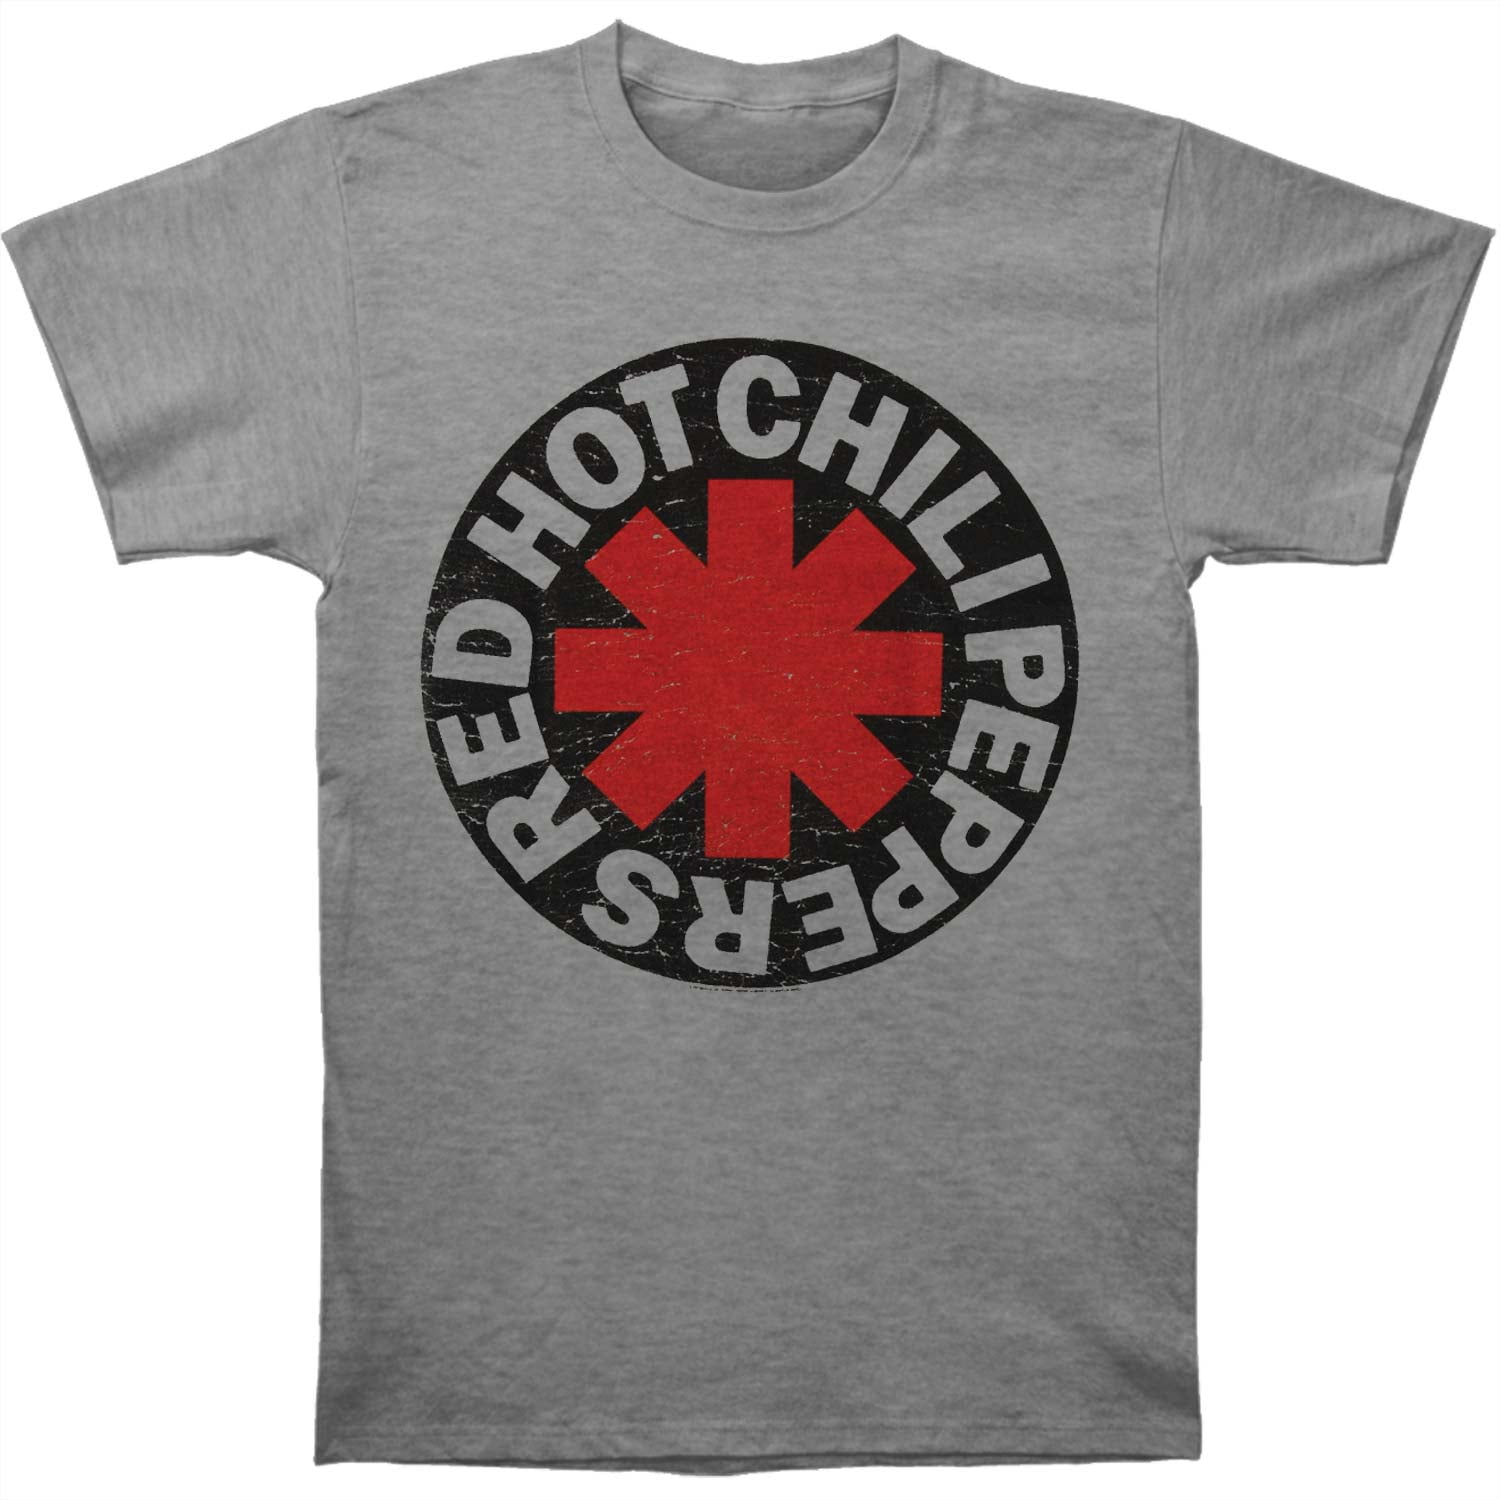 Red hot chili peppers tissue. Футболка Red hot Chili Peppers. Бейсболка Red hot Chili Peppers. Футболка 'Звёздочка'. Камуфляжная футболка с логотипом Red hot Chili Peppers.